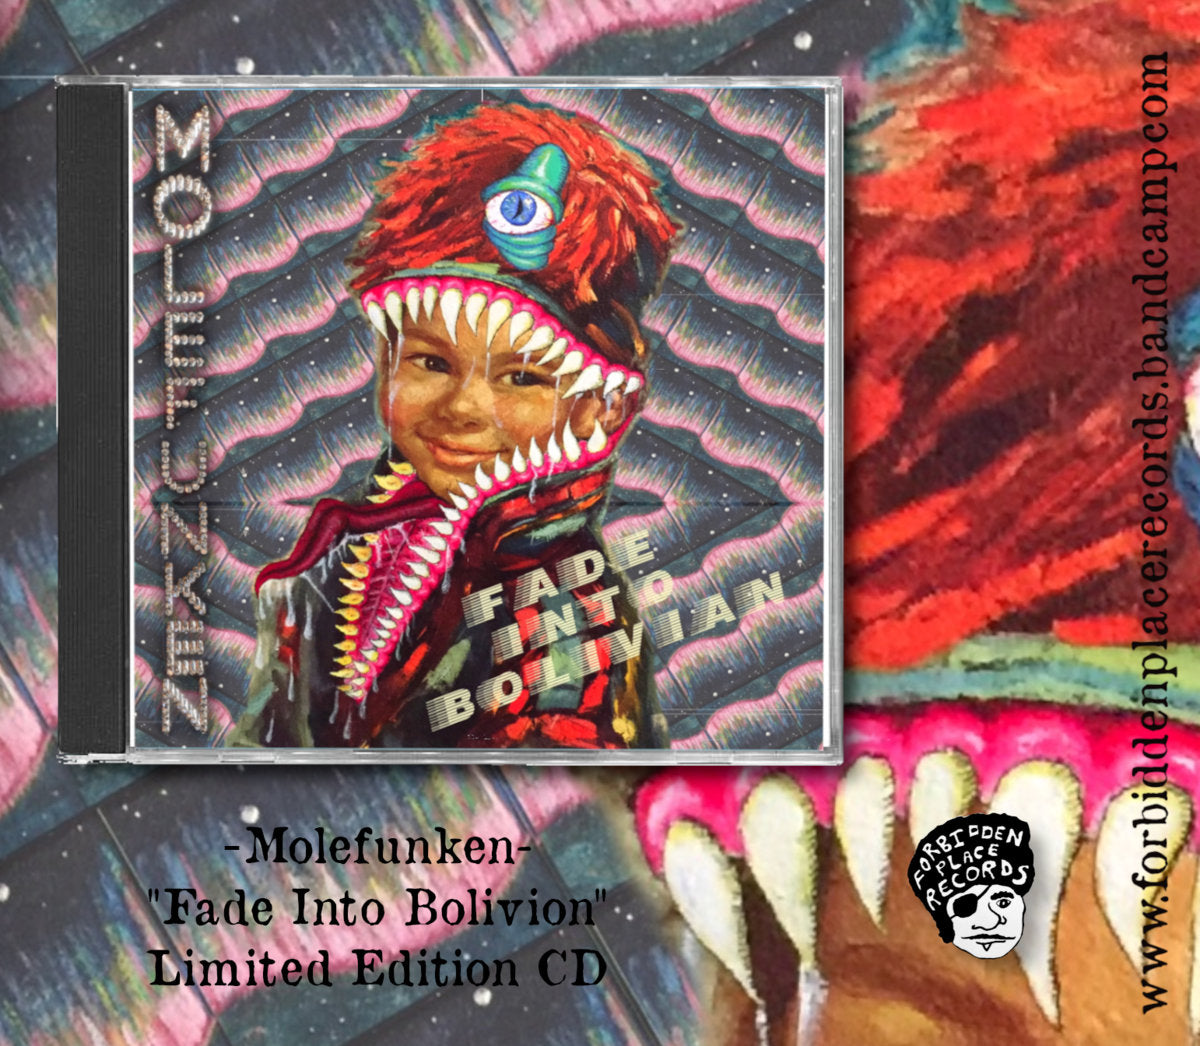 Molefunken - "Fade Into Bolivian" Compact Disc